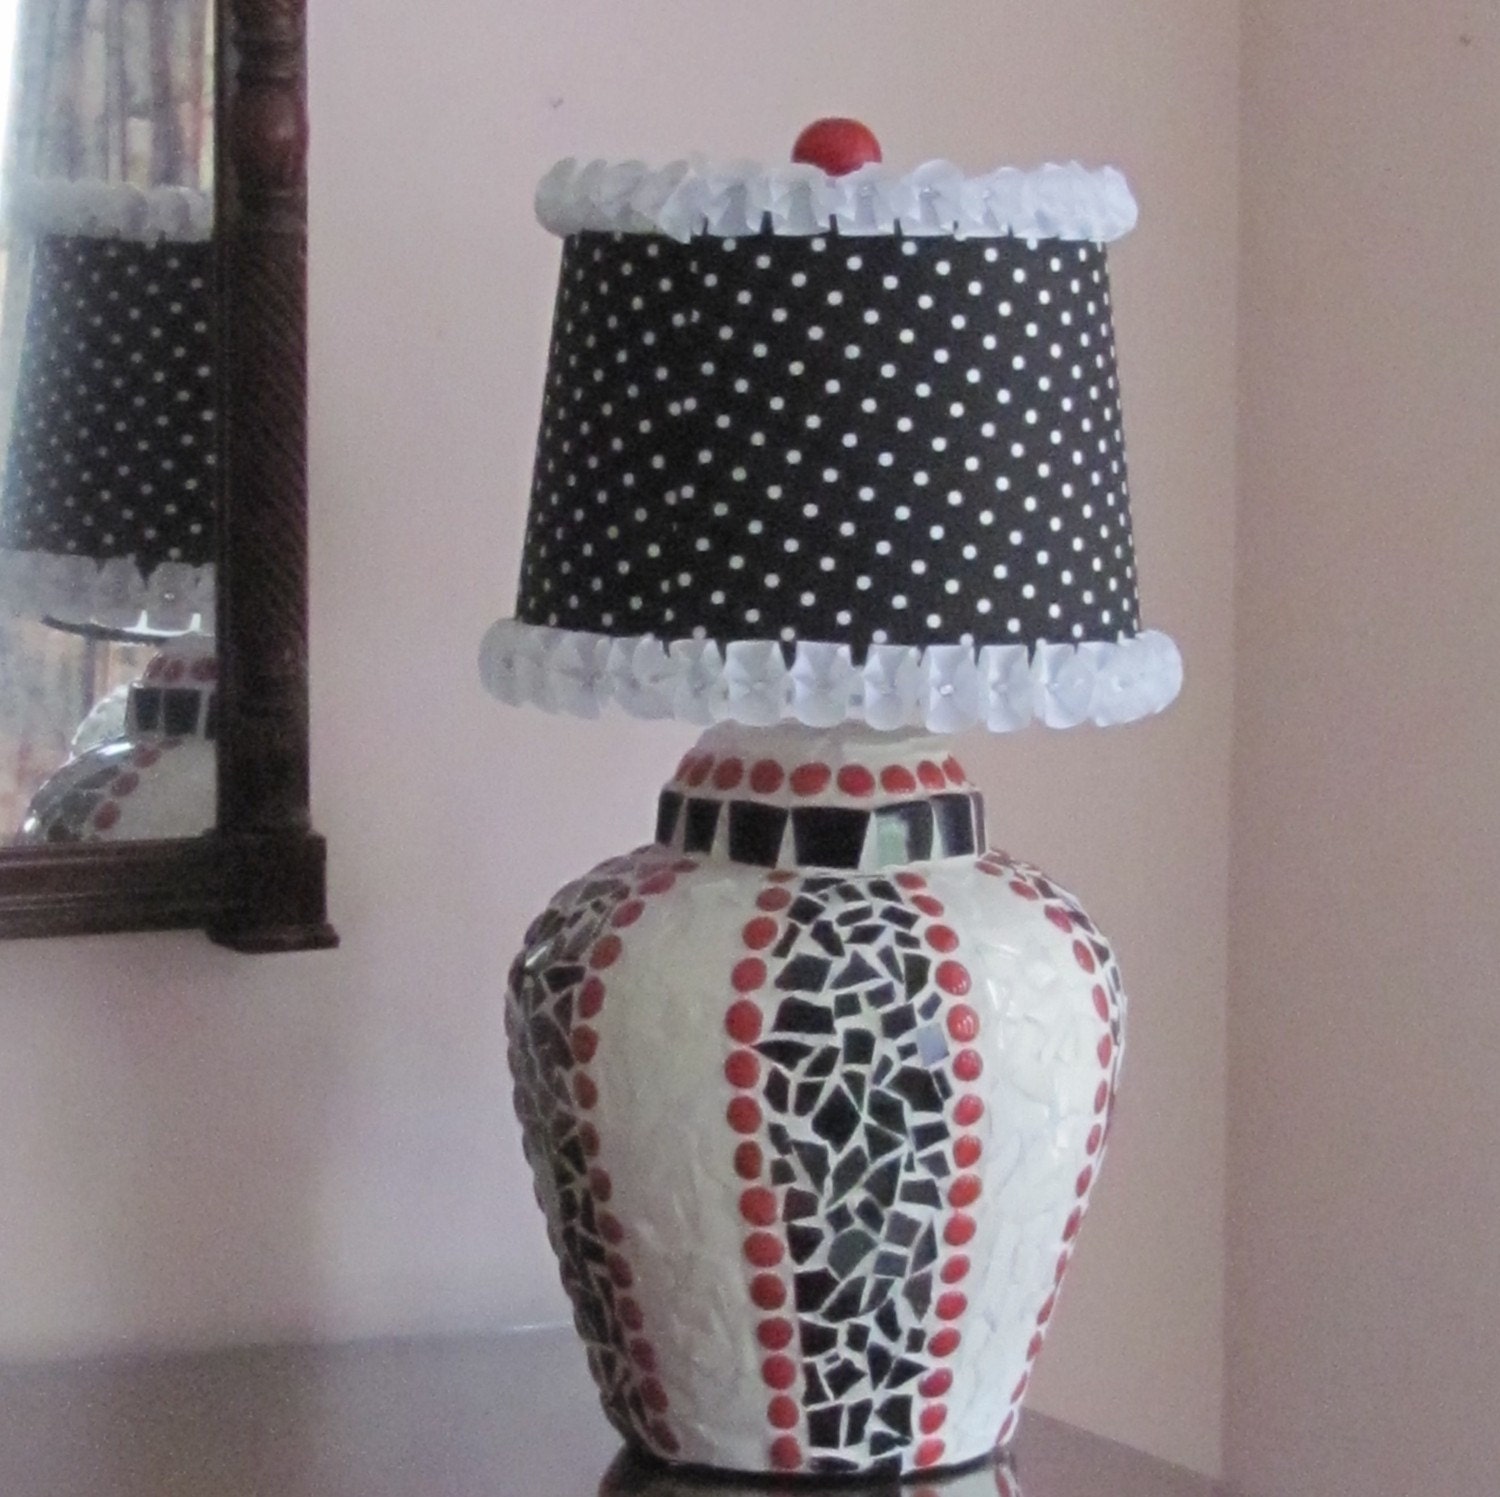 Mosaic Lamp with Polka Dot Shade - NellsBelles